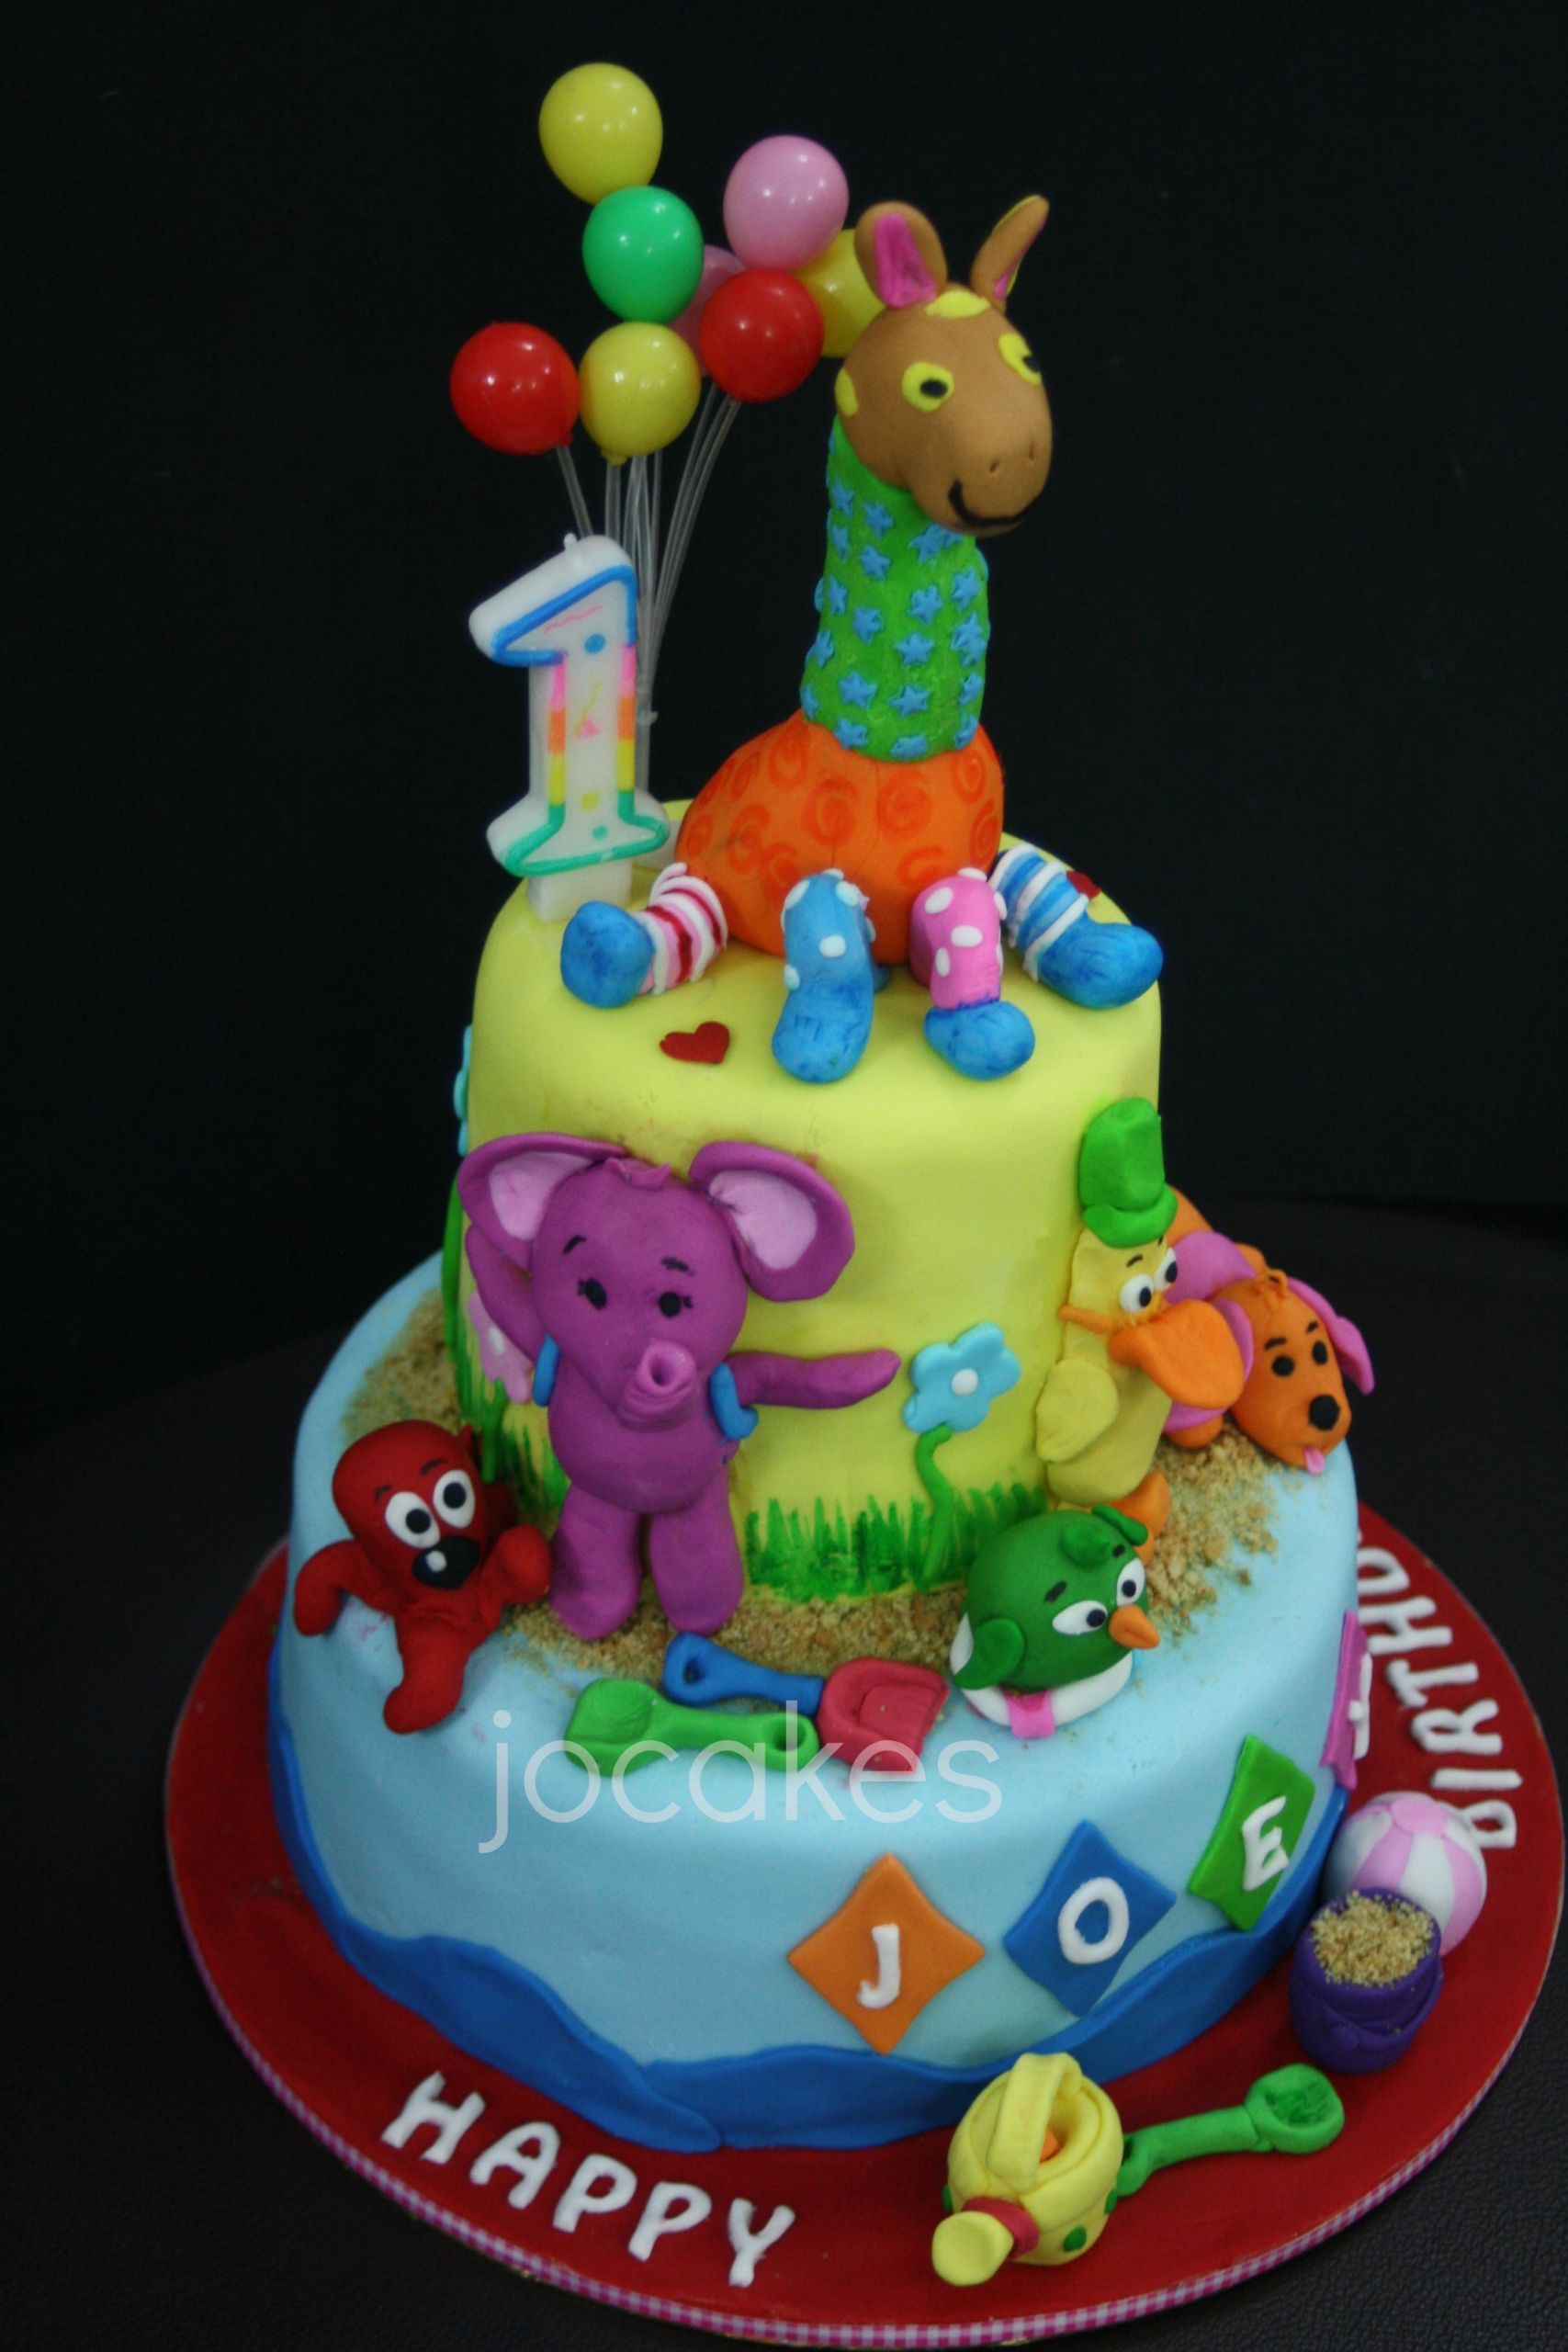 Pictures Of Happy Birthday Cakes
 Girrafe cake for Zoey’s 1st birthday